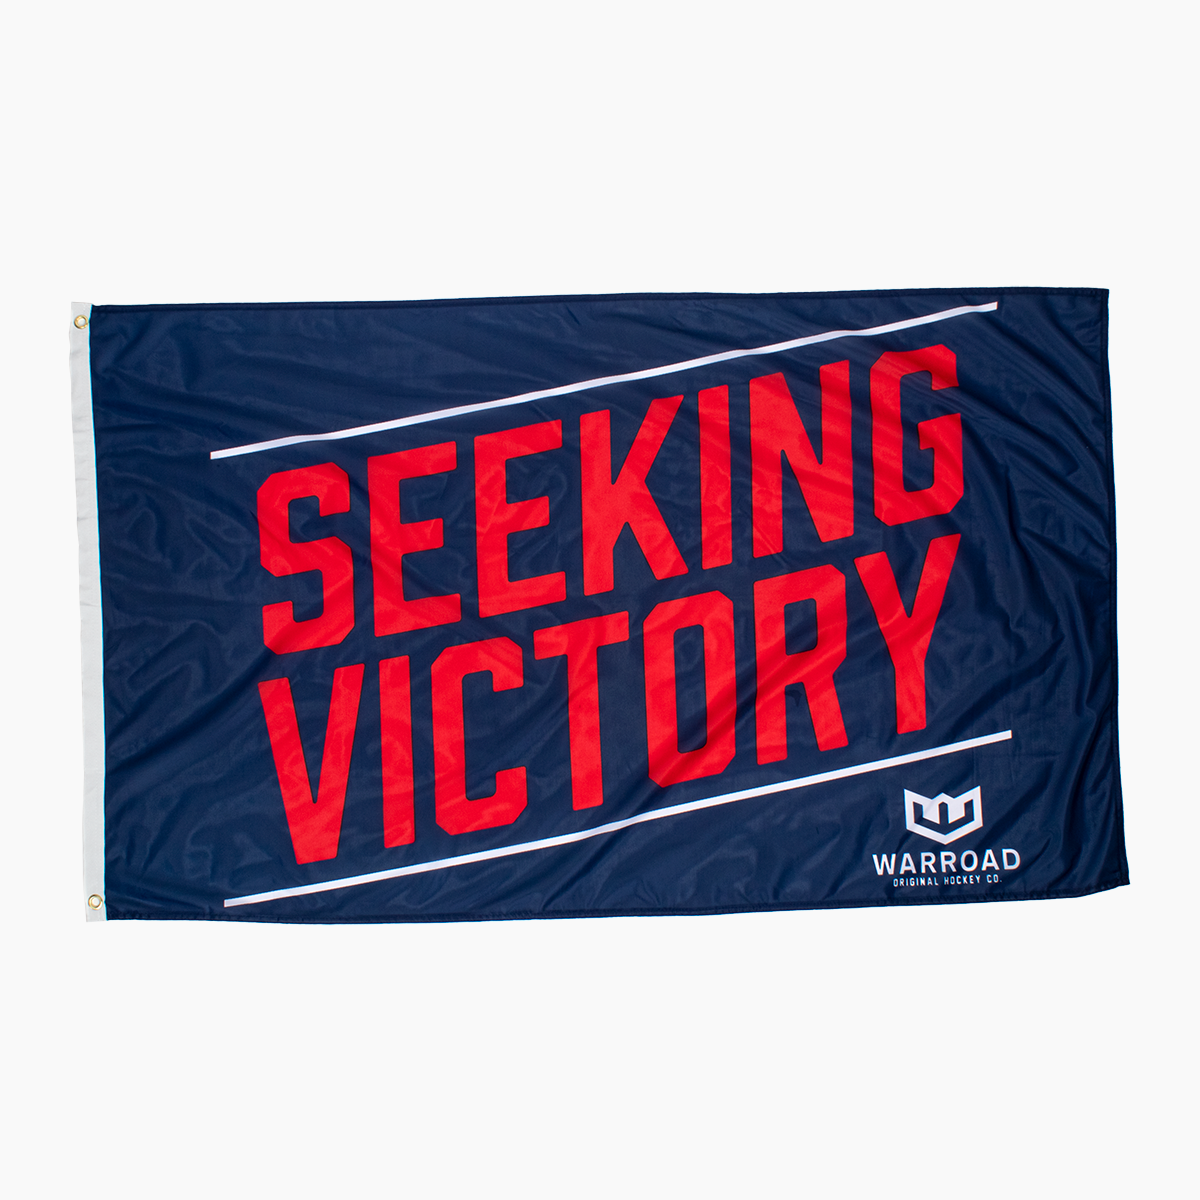 Seeking Victory Flag